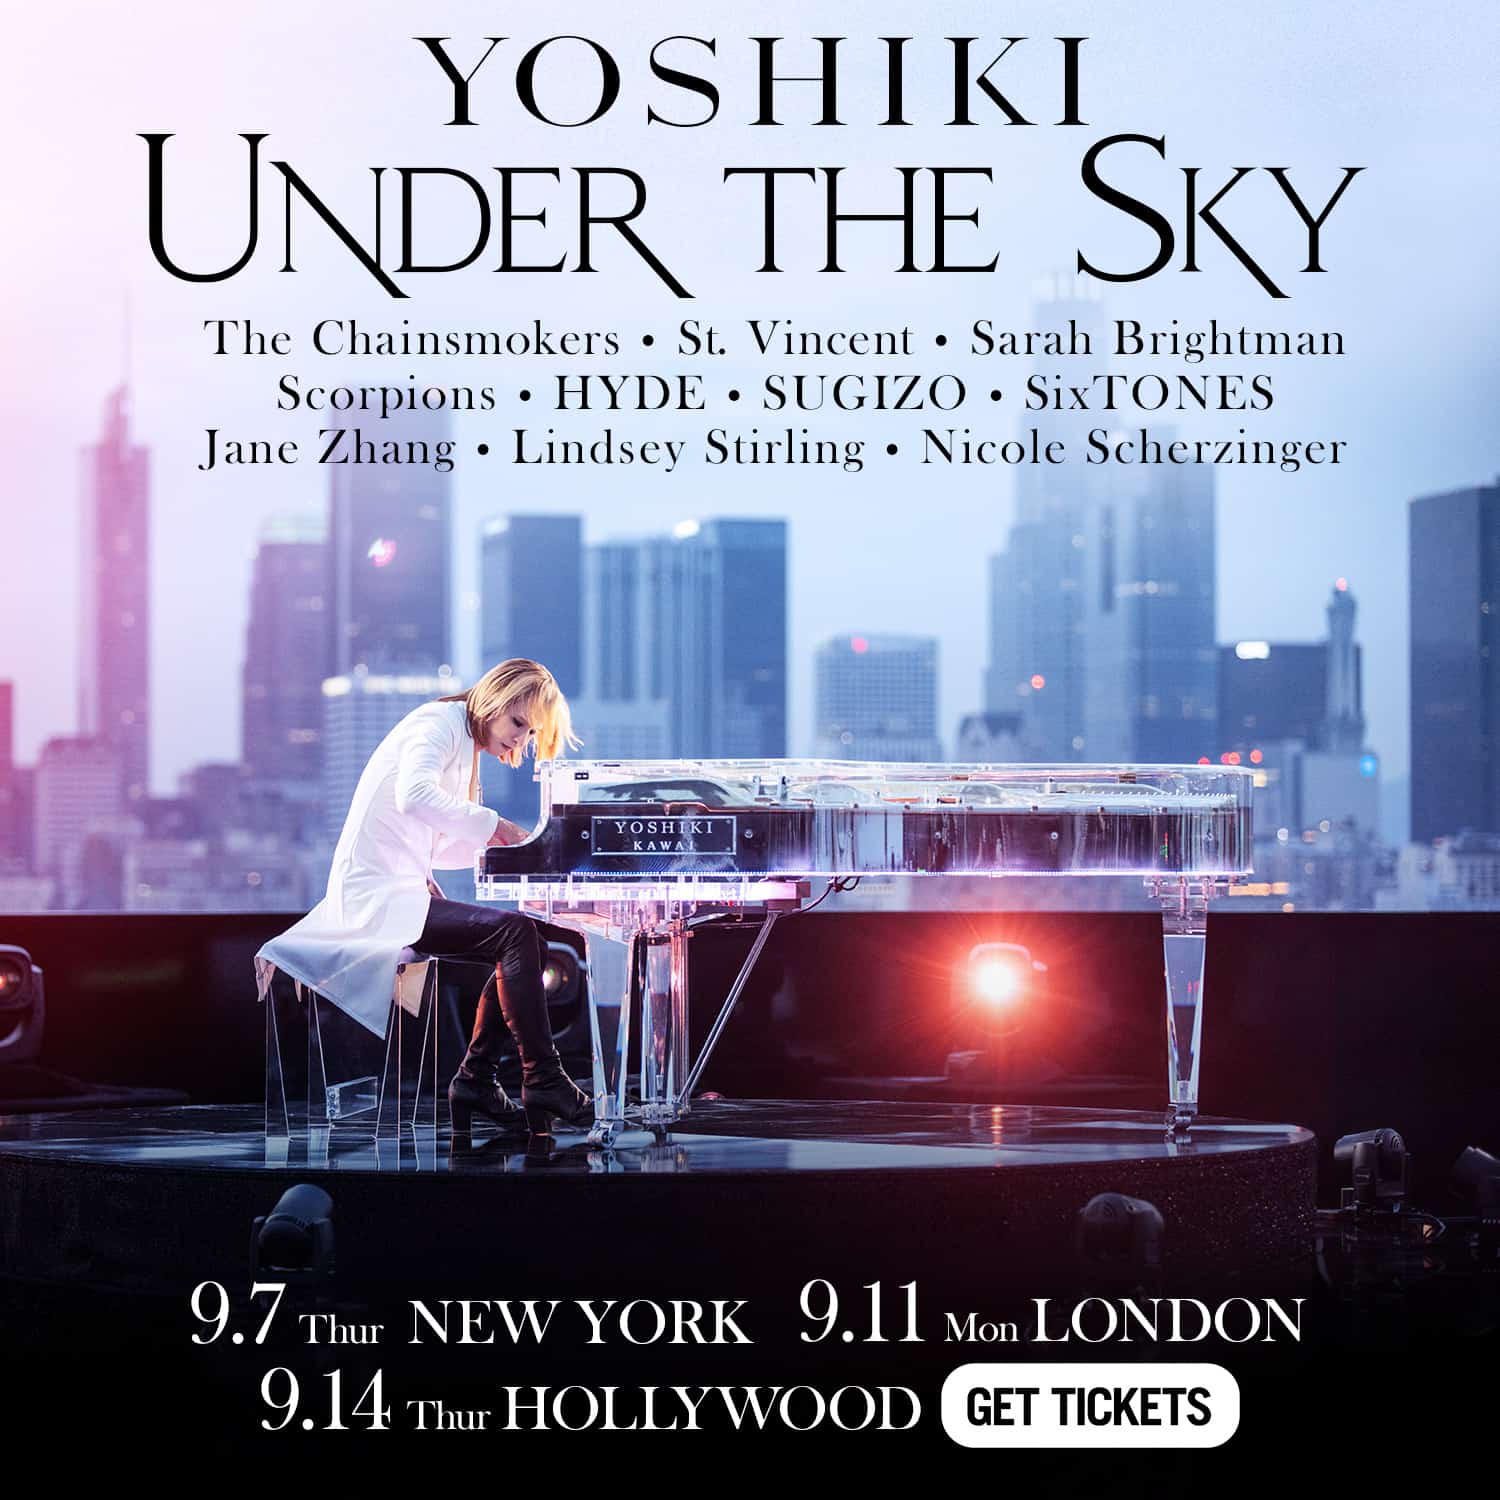 YOSHIKI Under the Sky